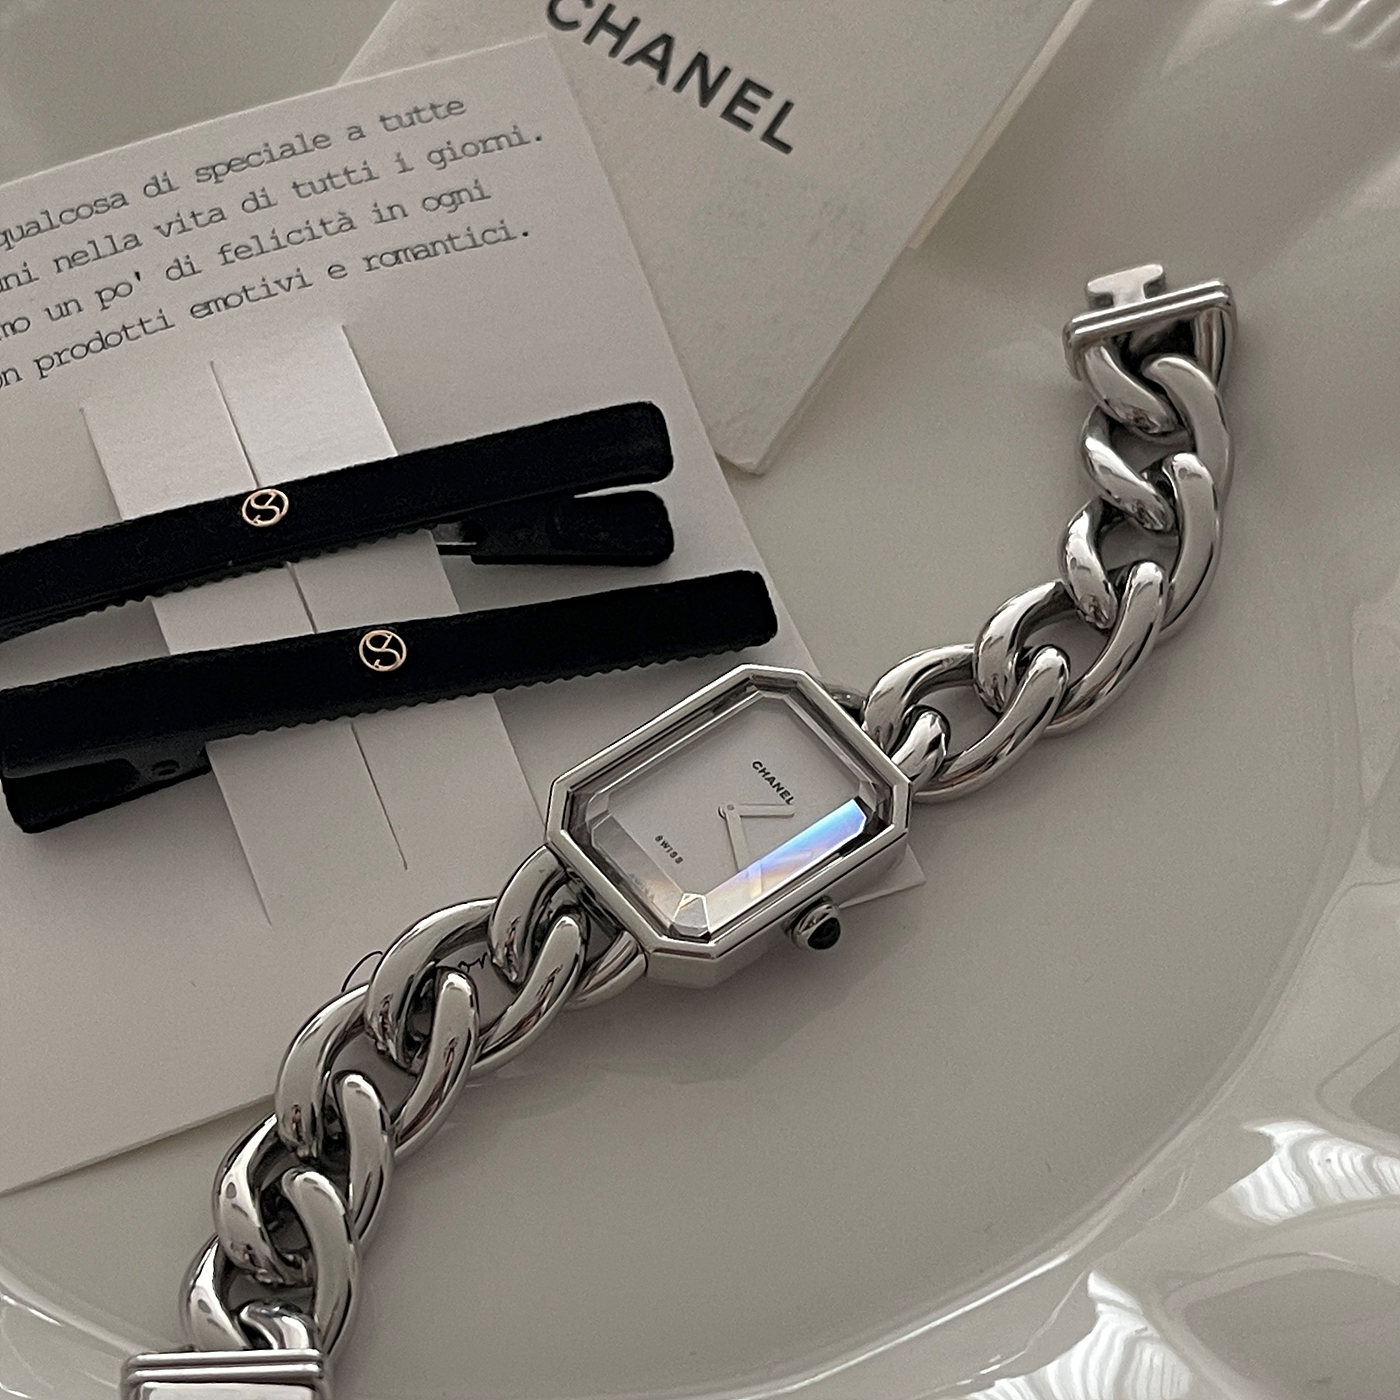 CHANEL PREMIÈRE gourmette chain watch white shell dial